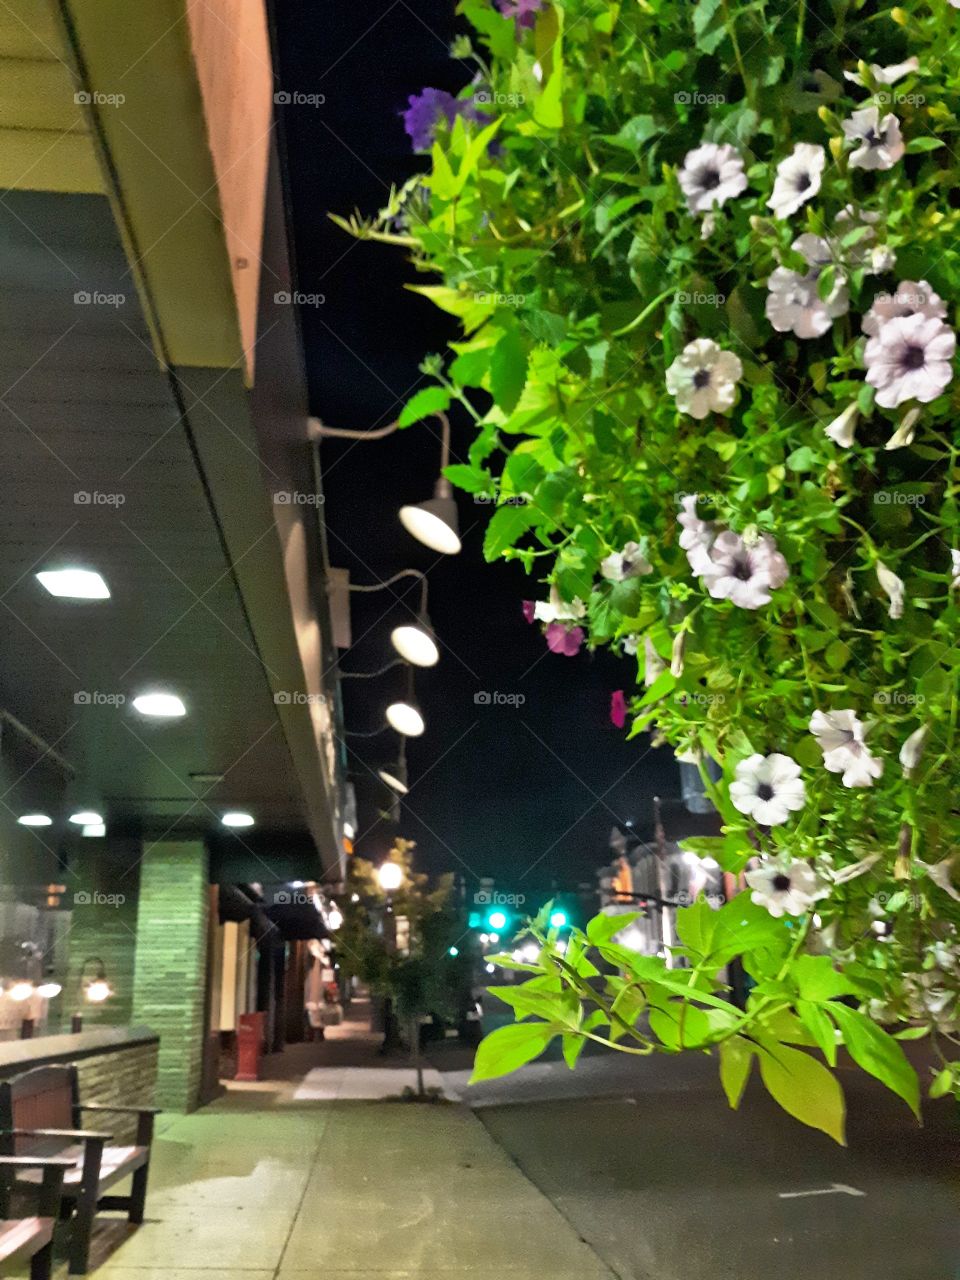 Flowers at night